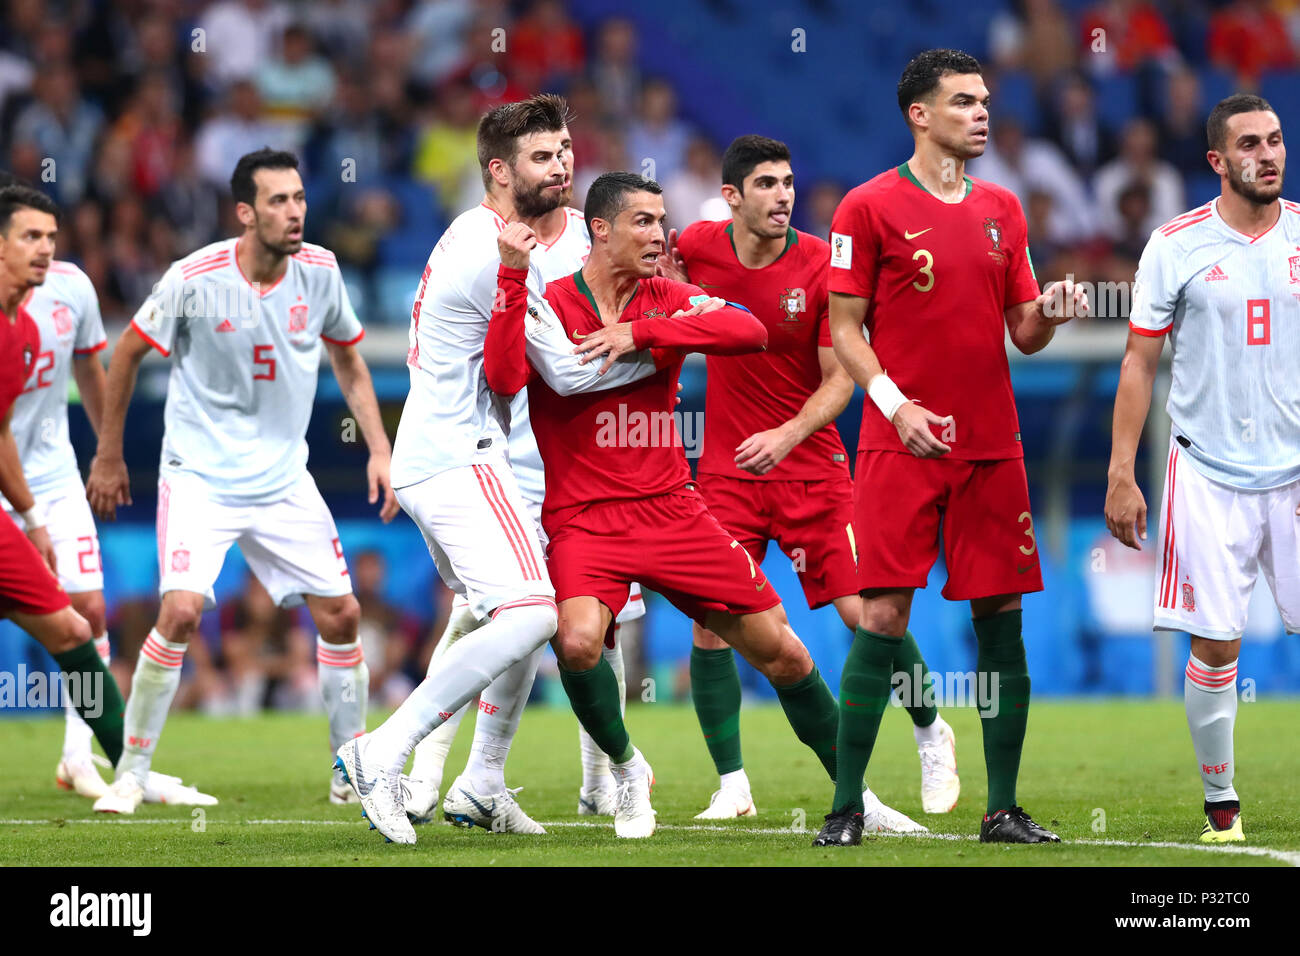 L-R) Gerard Pique (ESP), Cristiano Ronaldo (POR), 15 juin 2018 Football /  Soccer - COUPE DU MONDE : Russie 2018 match du groupe B entre le Portugal  3-3 Espagne au stade Fisht